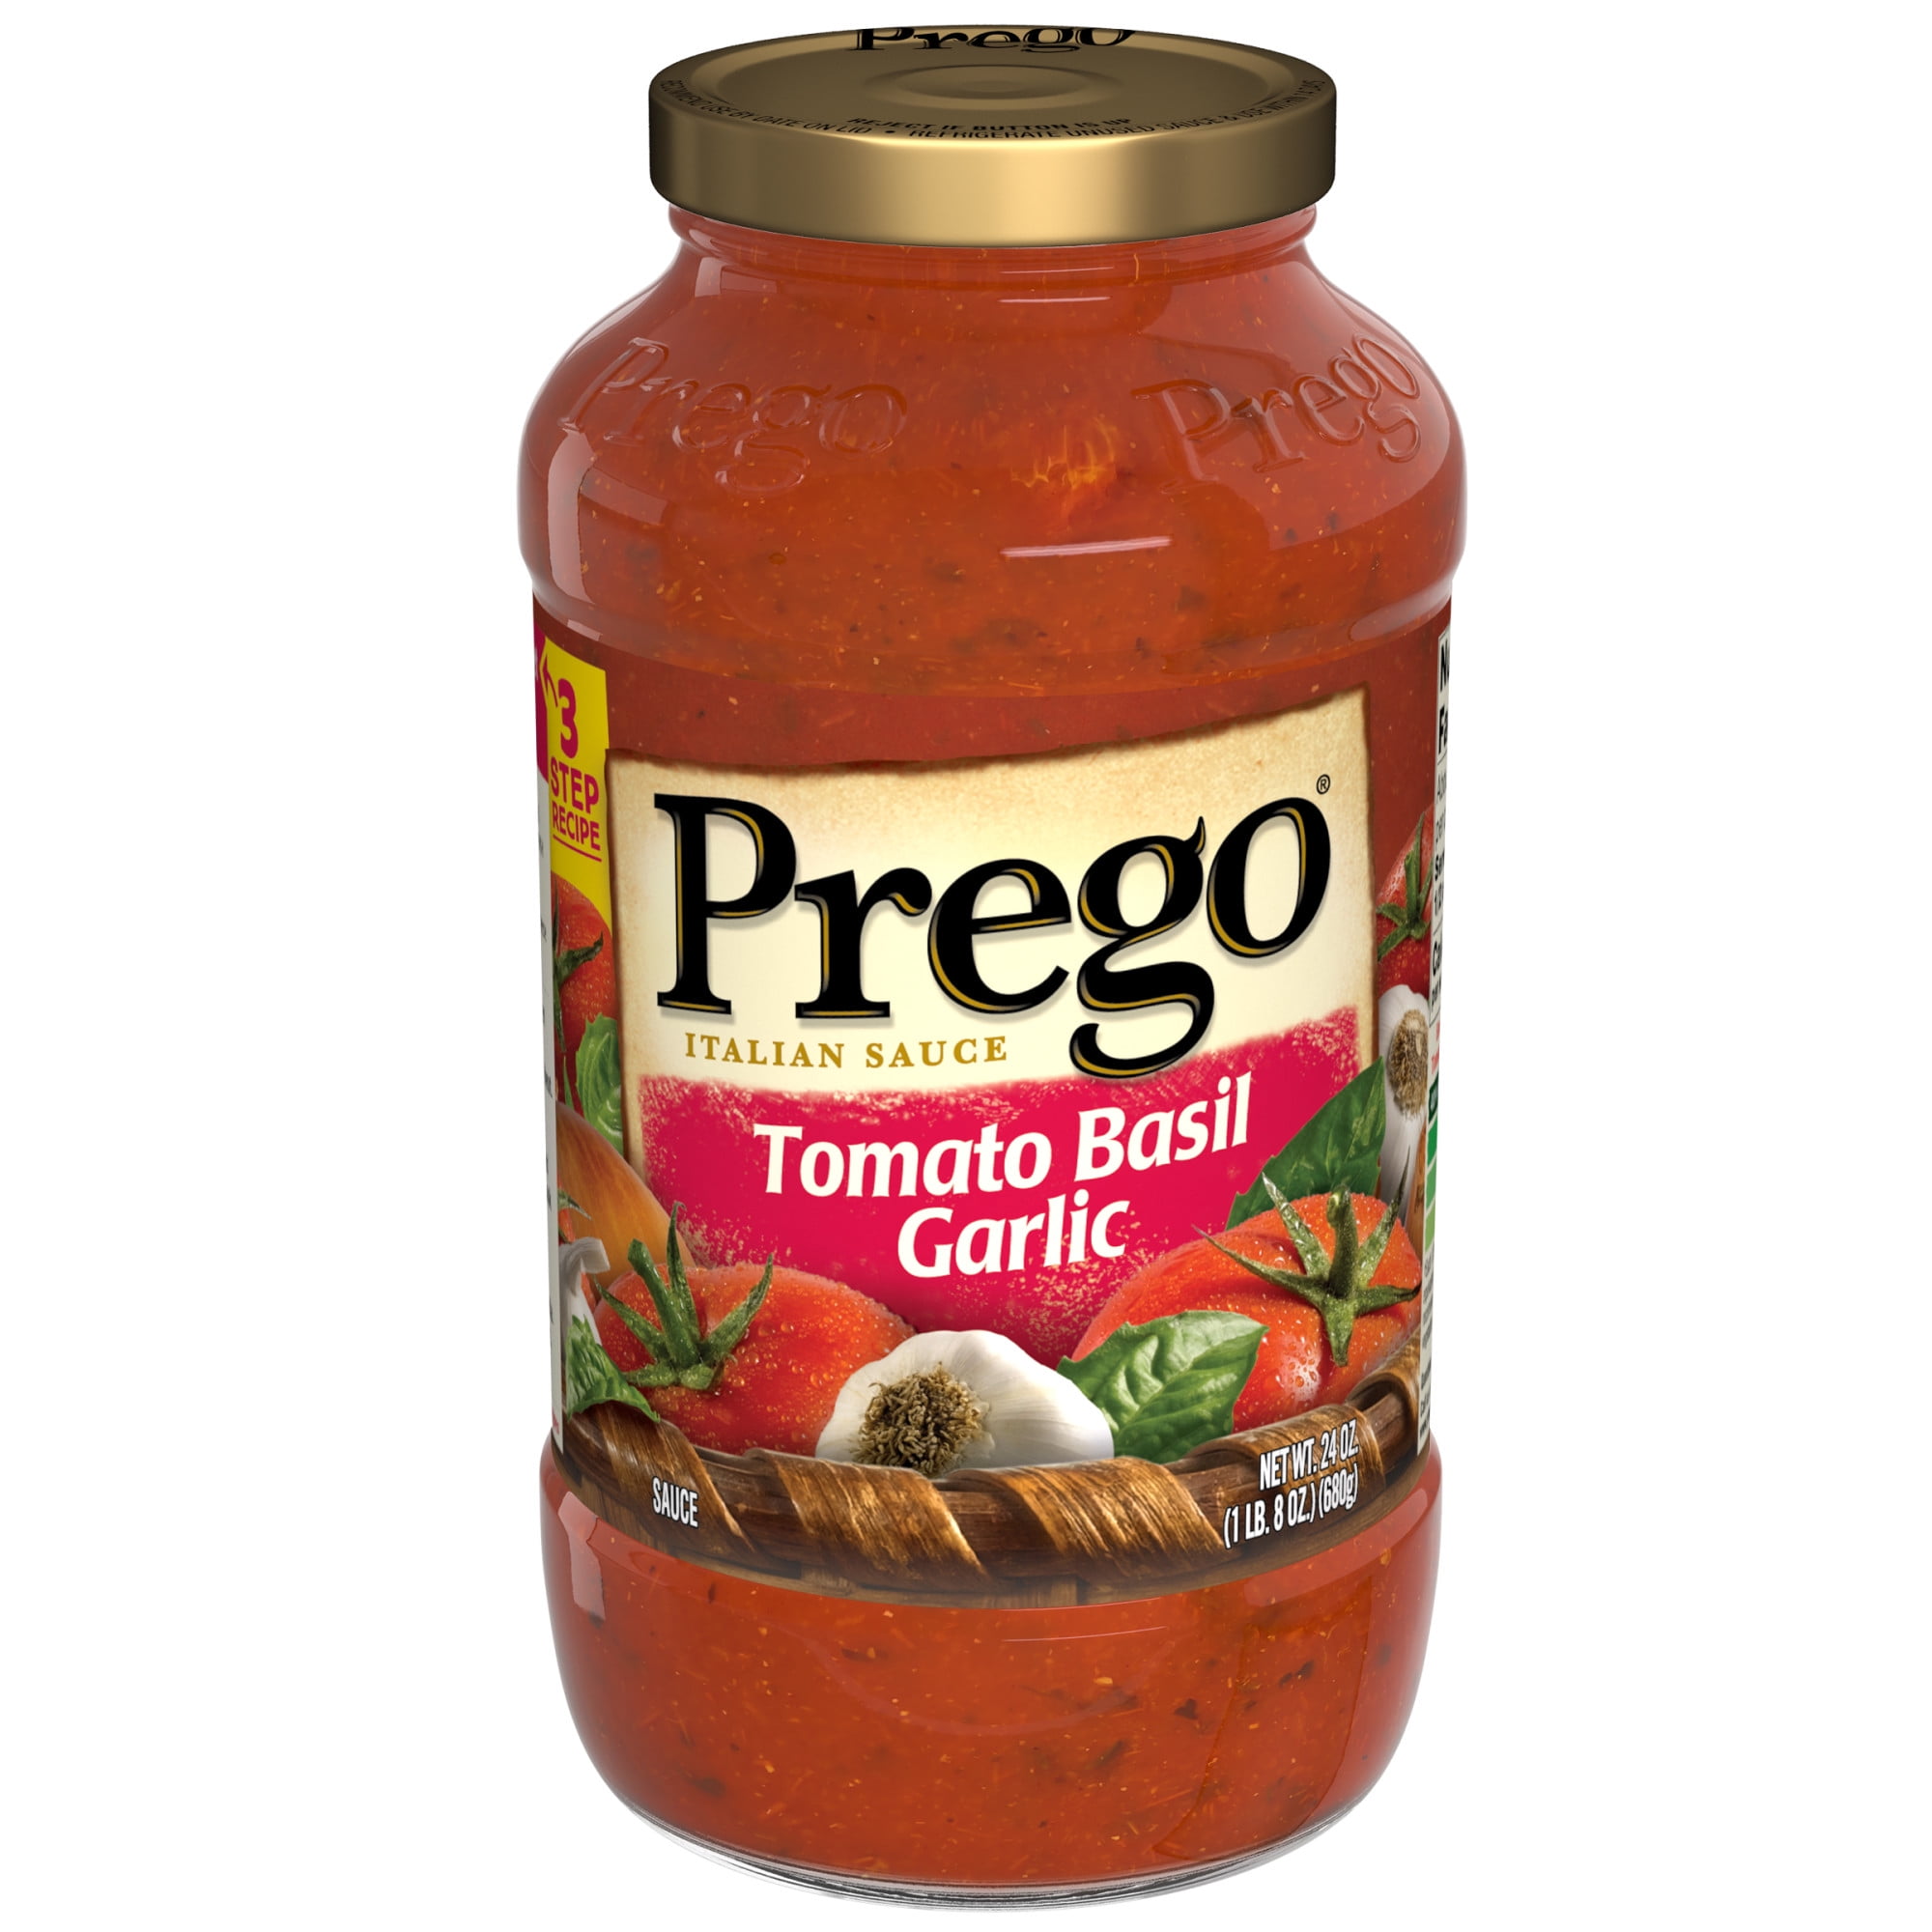 Prego Pasta Sauce, Italian Tomato Sauce with Basil & Garlic, 24 Ounce Jar